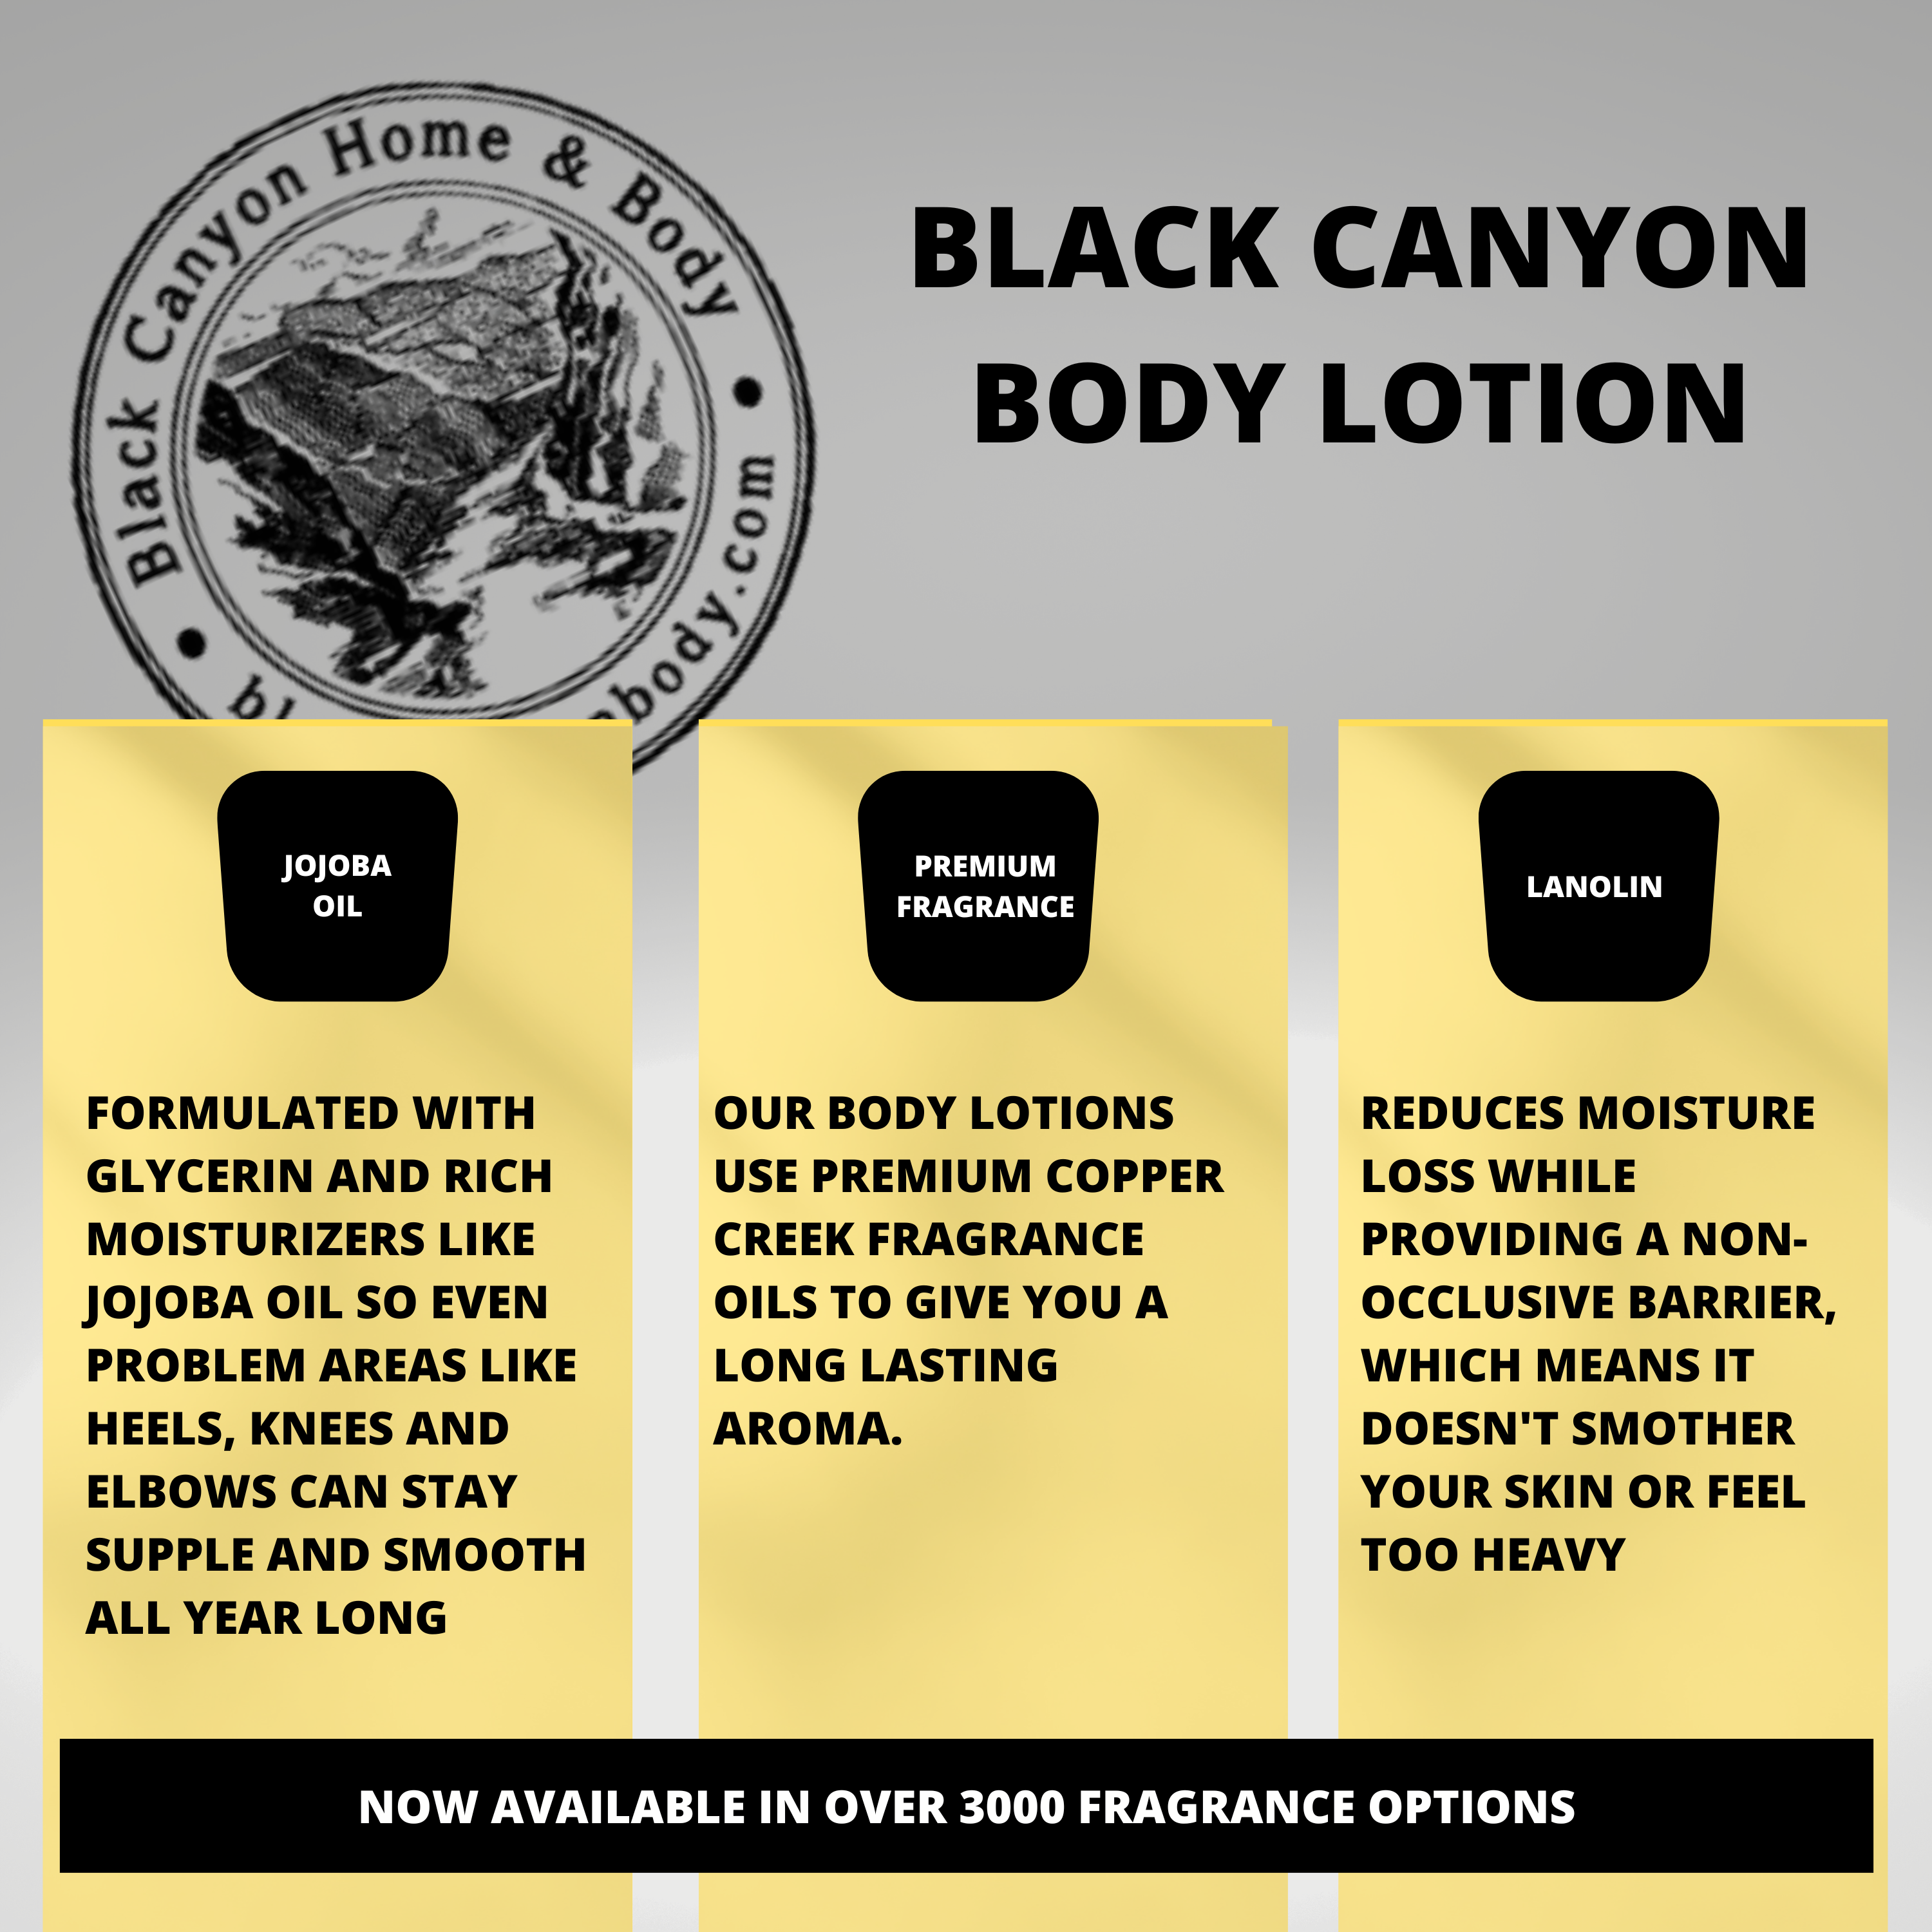 Black Canyon Mauna Loa Sugar Scented Luxury Body Lotion with Lanolin and Jojoba Oil